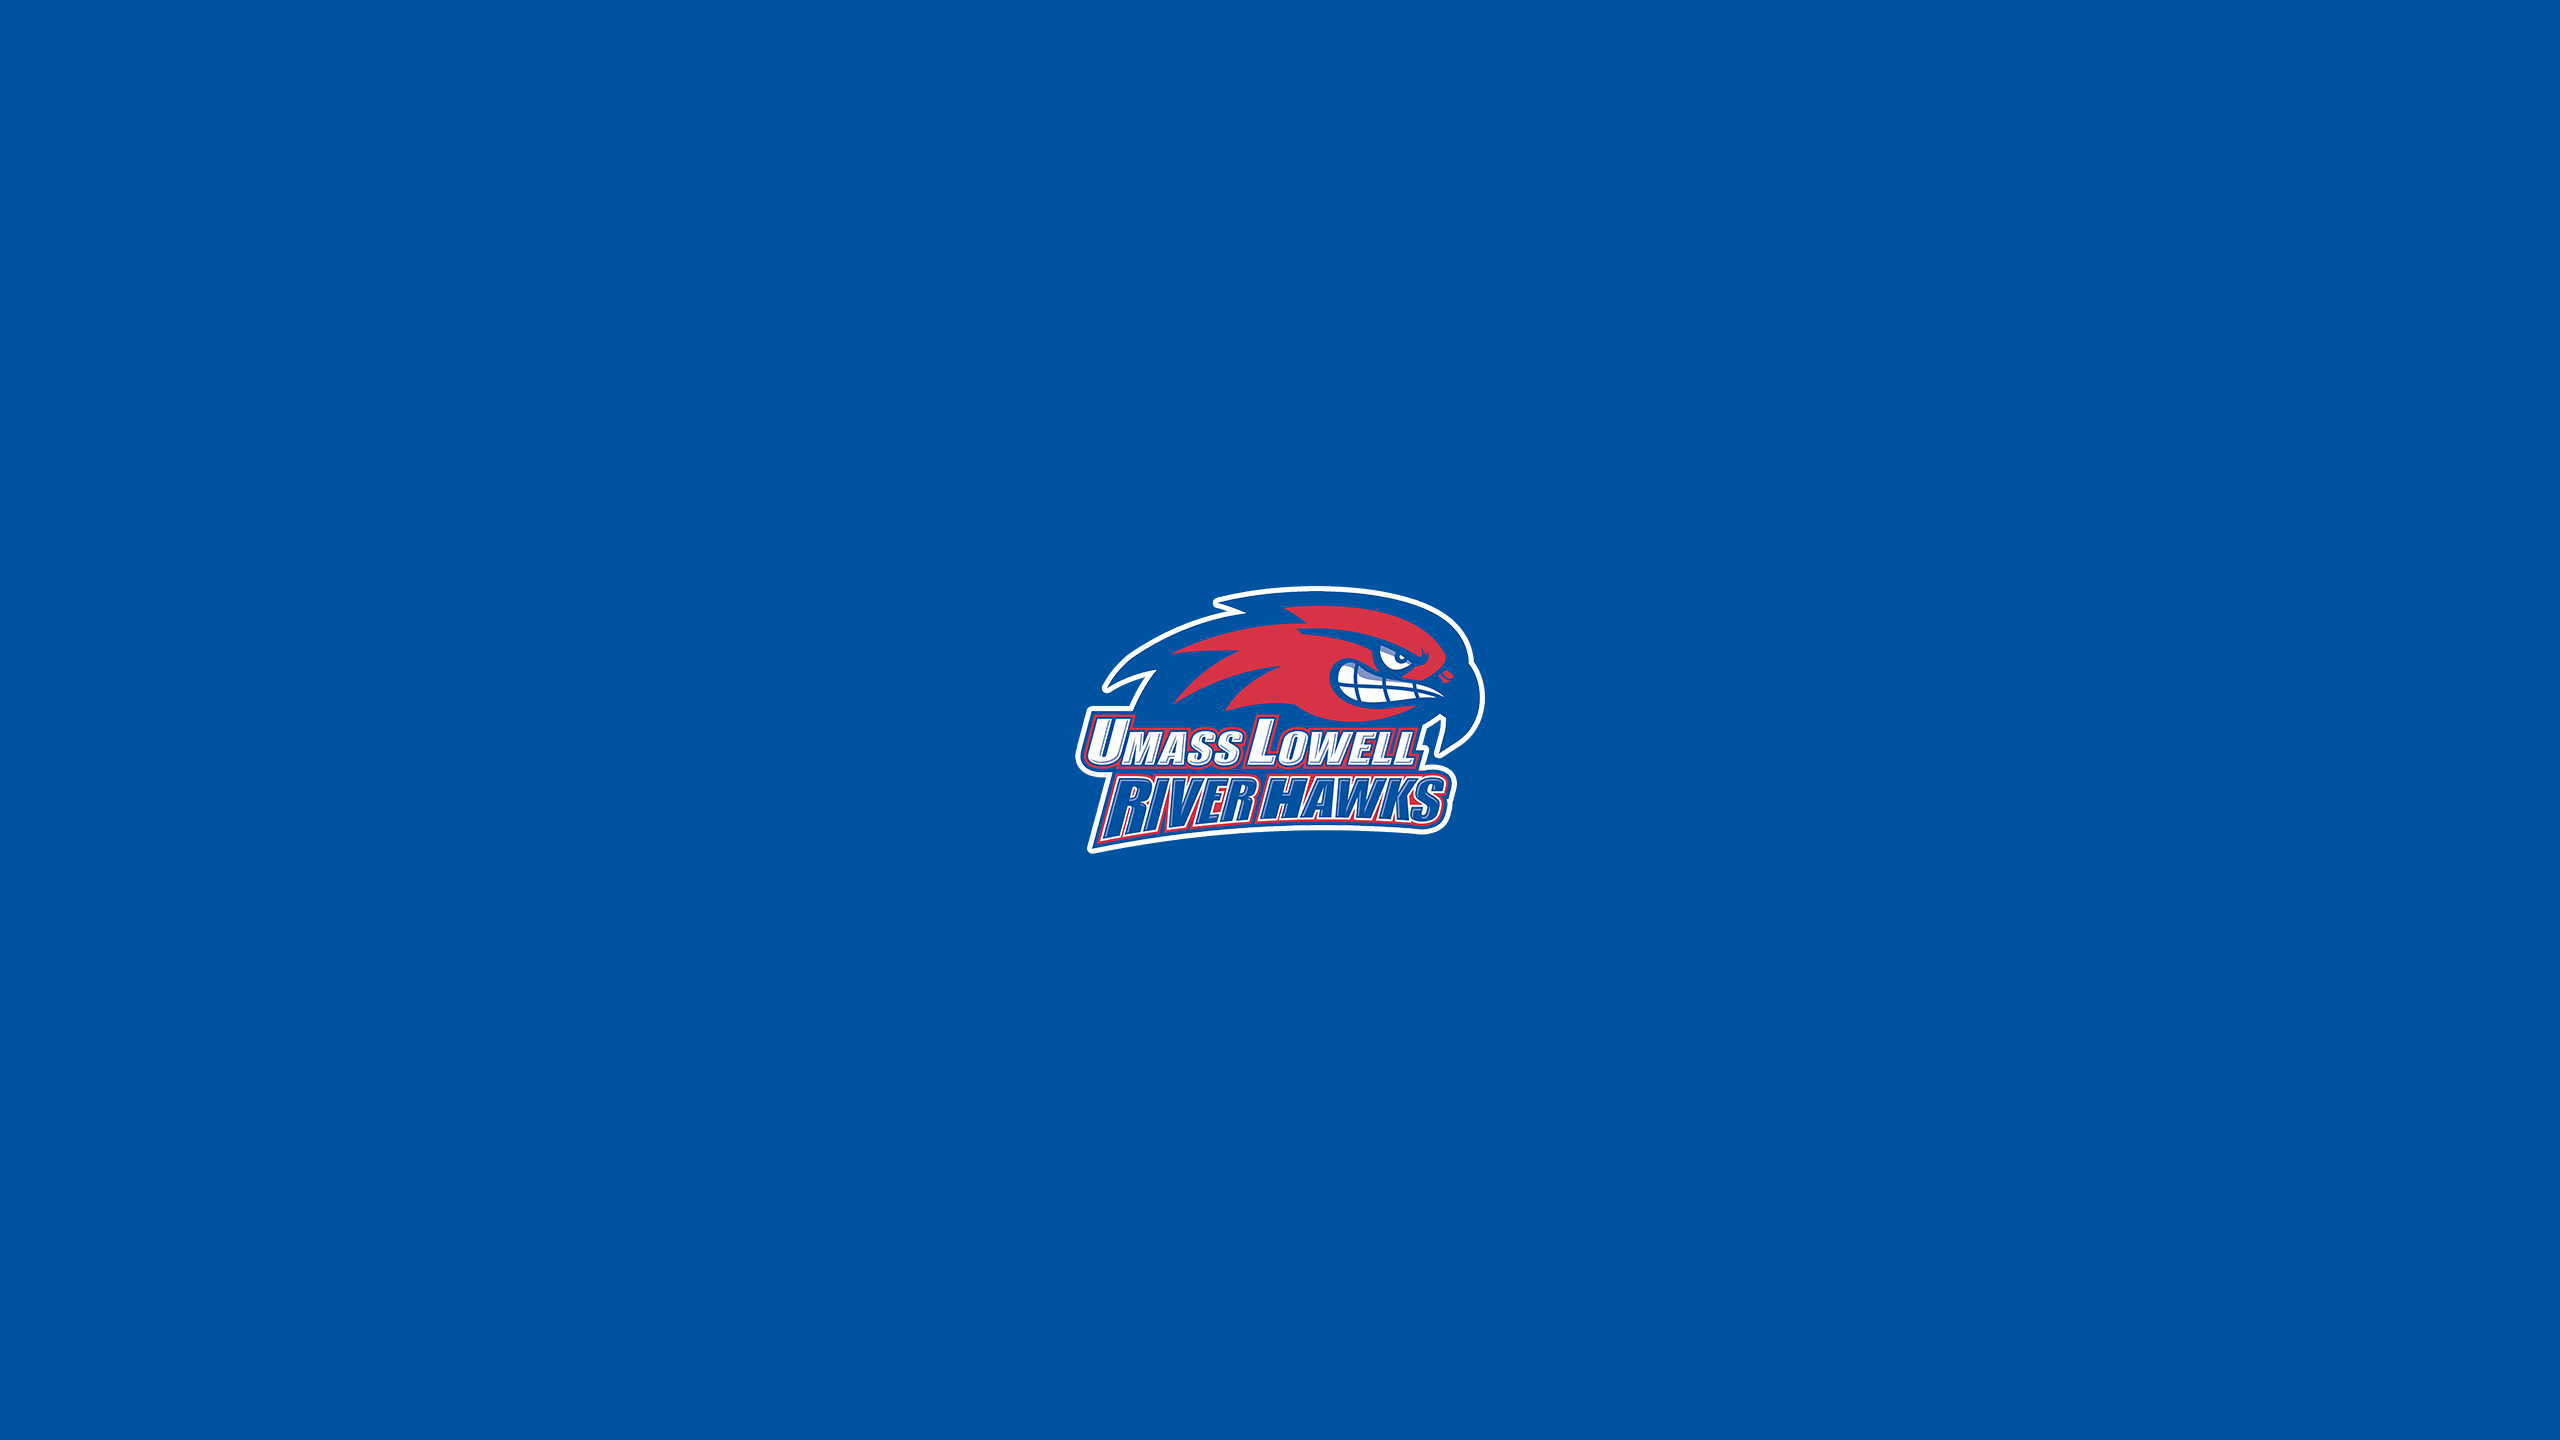 UMass-Lowell River Hawks Basketball - NCAAB - Square Bettor